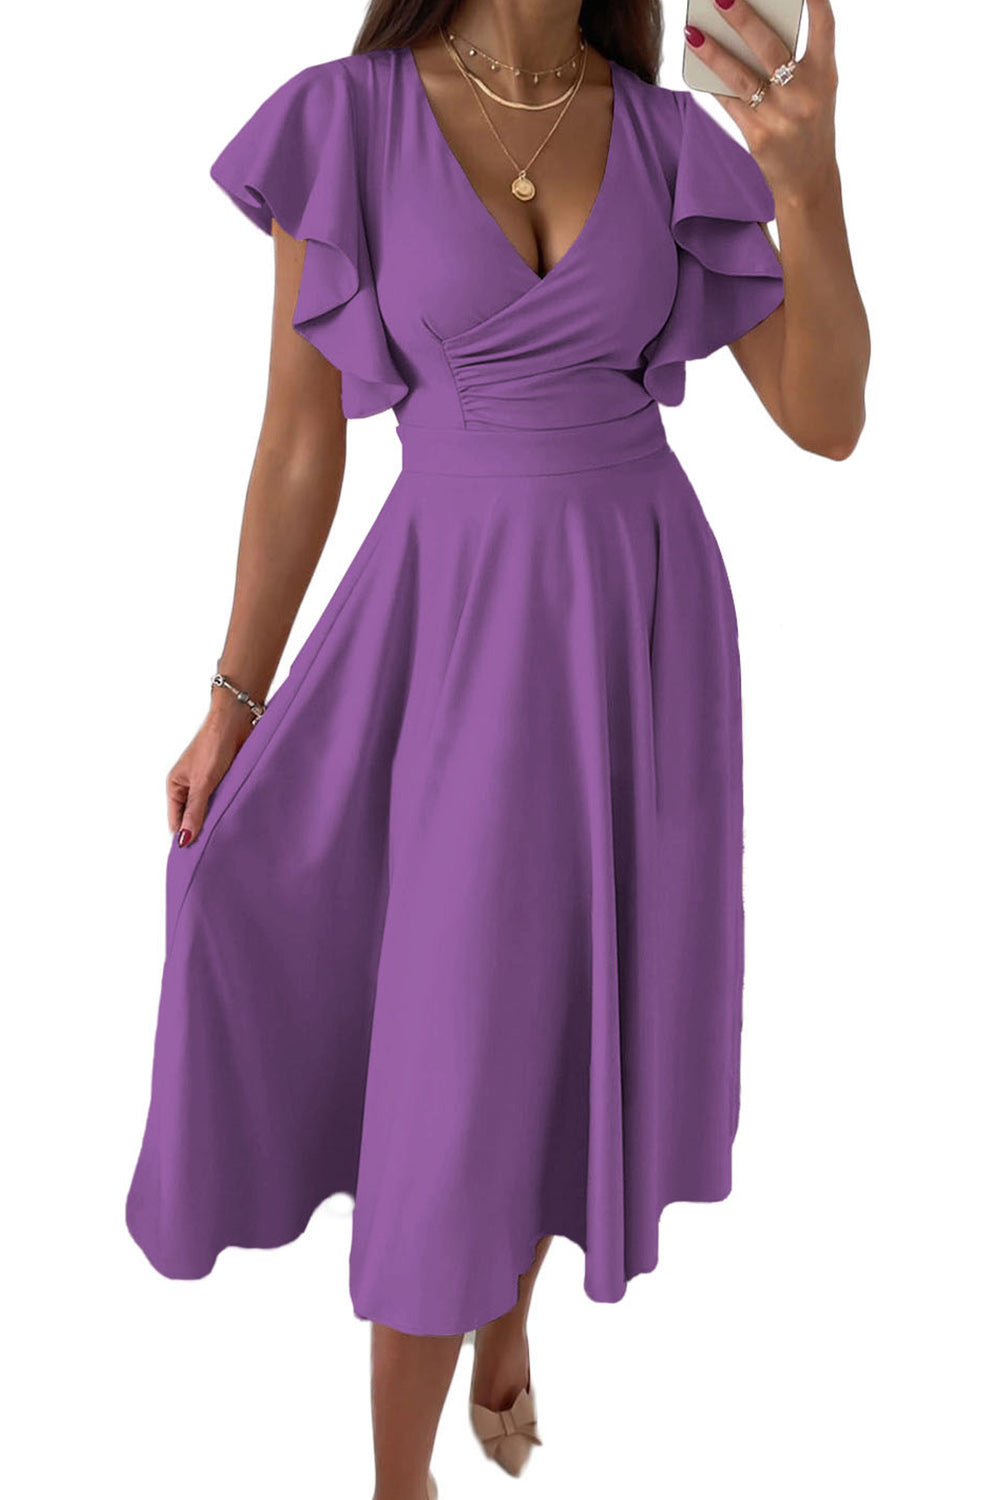 LC6110363-8-S, LC6110363-8-M, LC6110363-8-L, LC6110363-8-XL, LC6110363-8-2XL, Purple Womens V Neck Ruffle Sleeve Wrap Dress Midi Dress Cocktail Party Dress